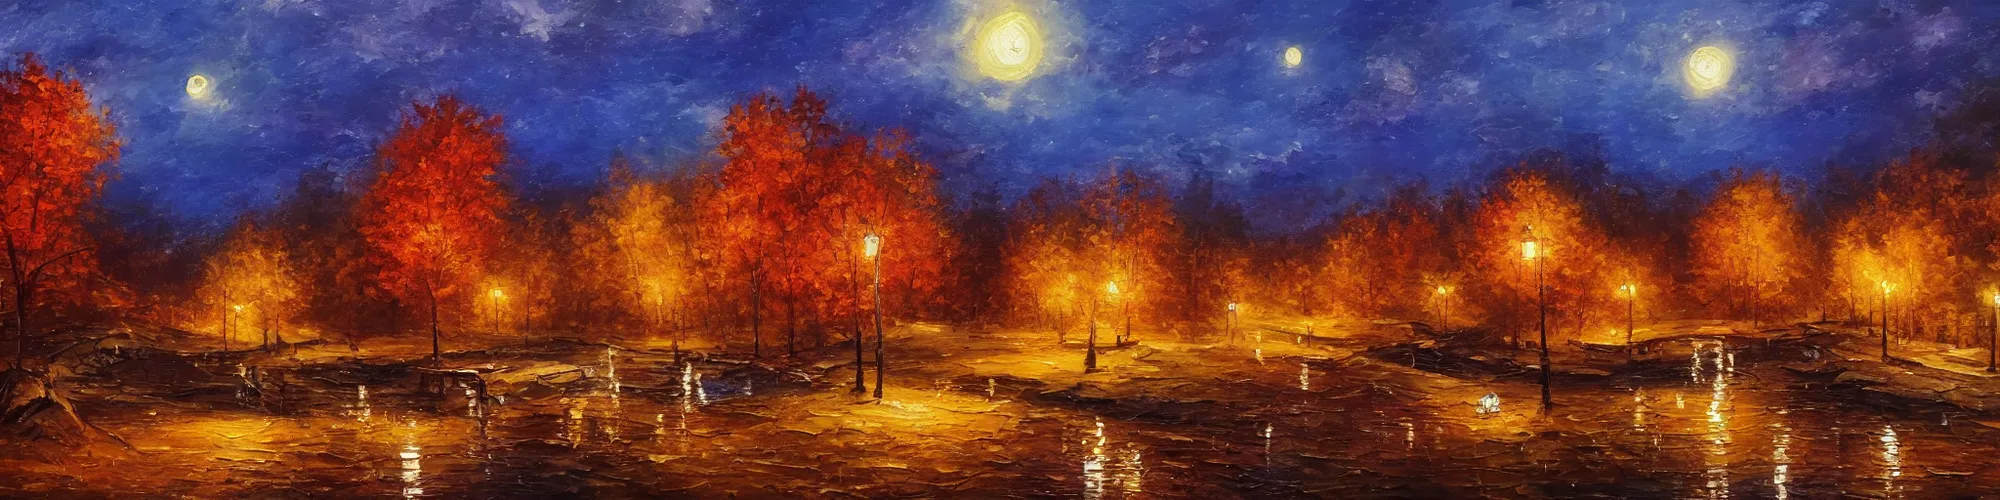 Prompt: painting of autumn village landscape during night, award winning painting, beautiful, breathtaking, stunning scenery, trending on artstation, masterpiece, high definition, 8 k